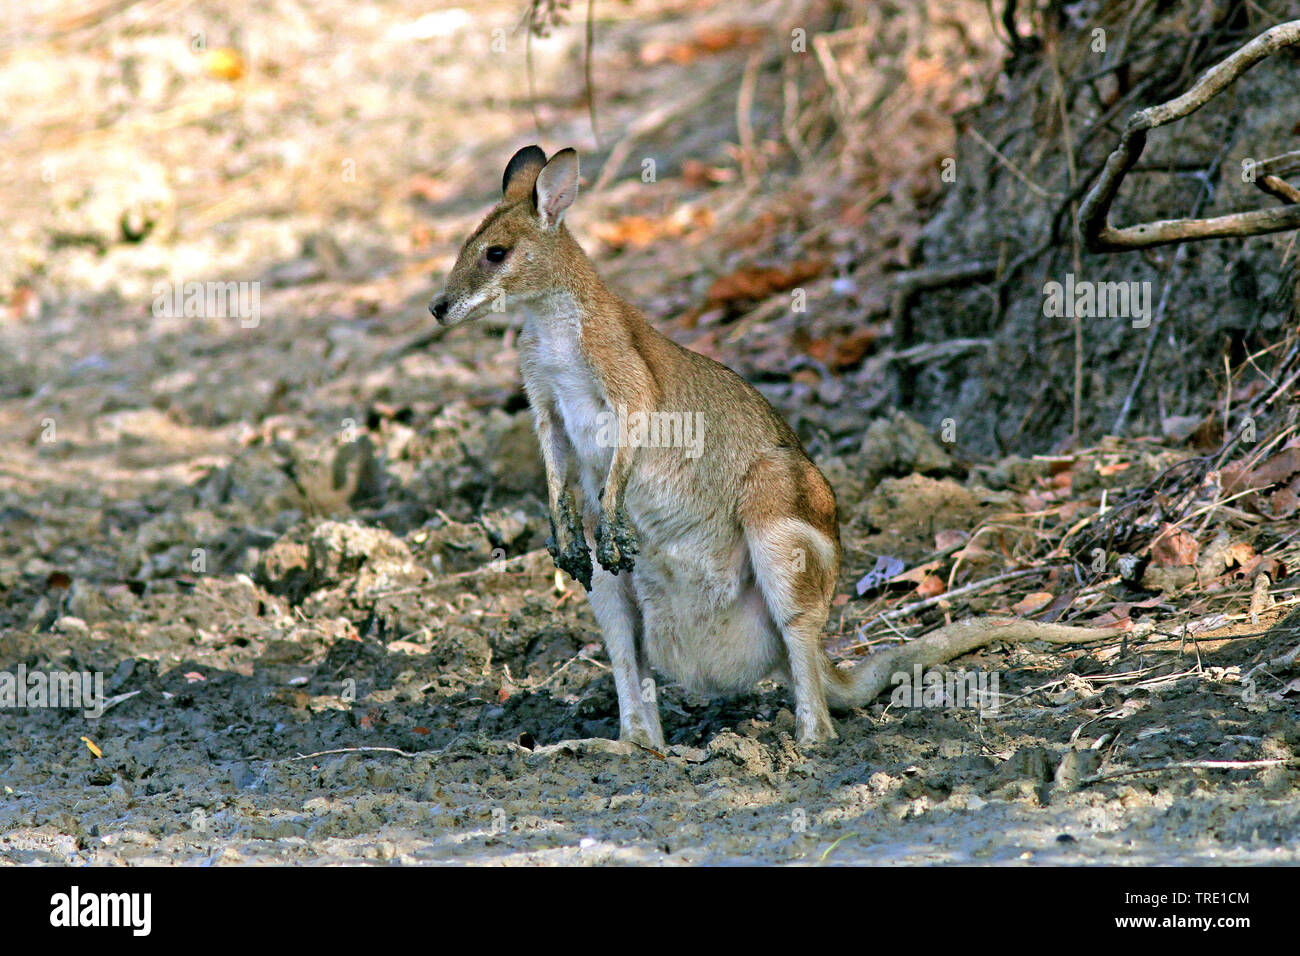 agile wallaby, sandy wallaby (Macropus agilis, Wallabia agilis), sitting, Australia Stock Photo